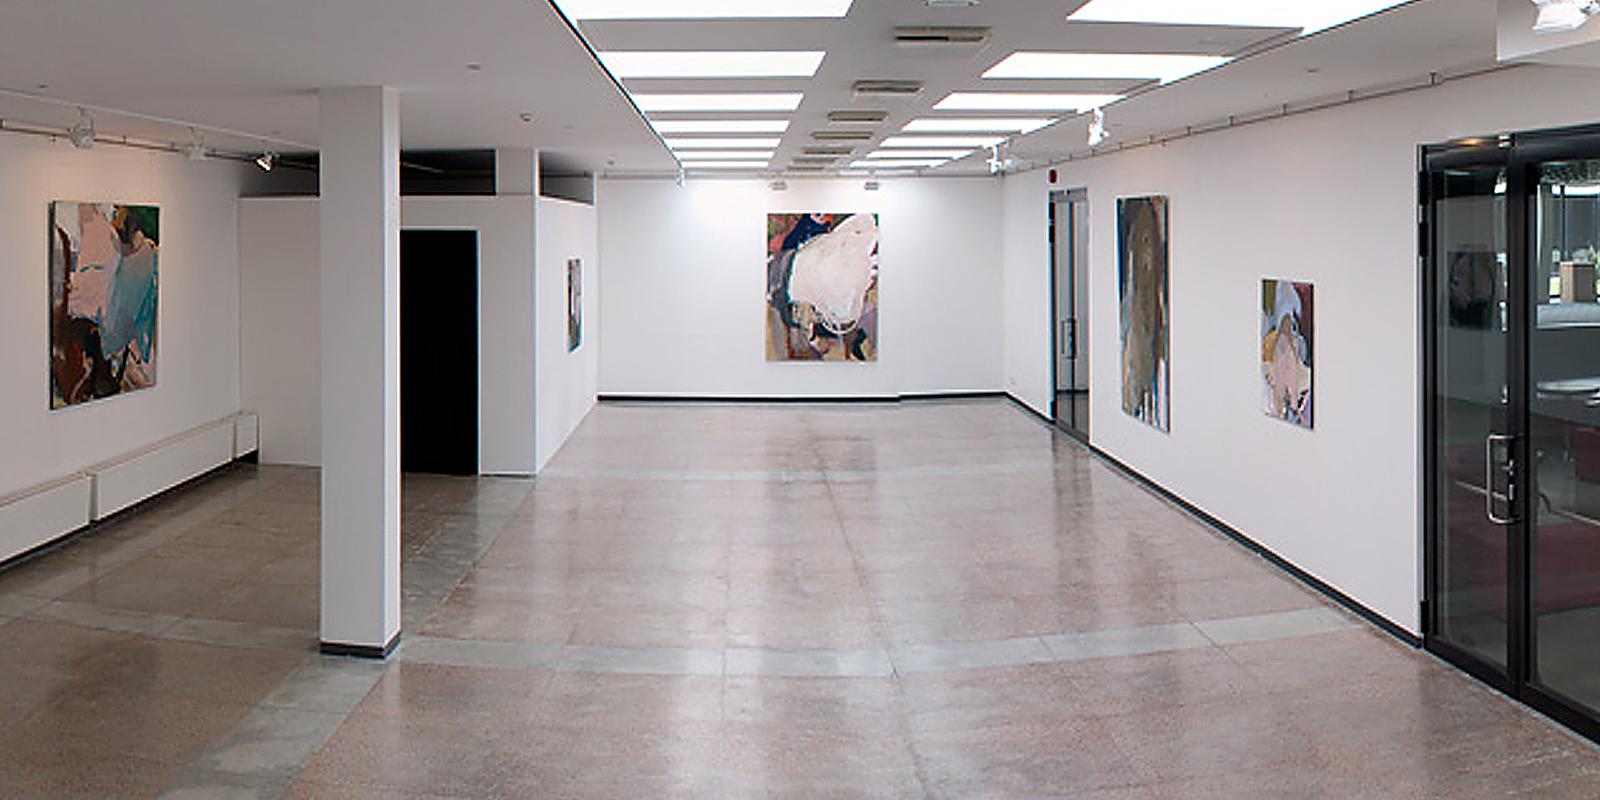 Haapsalu City Gallery